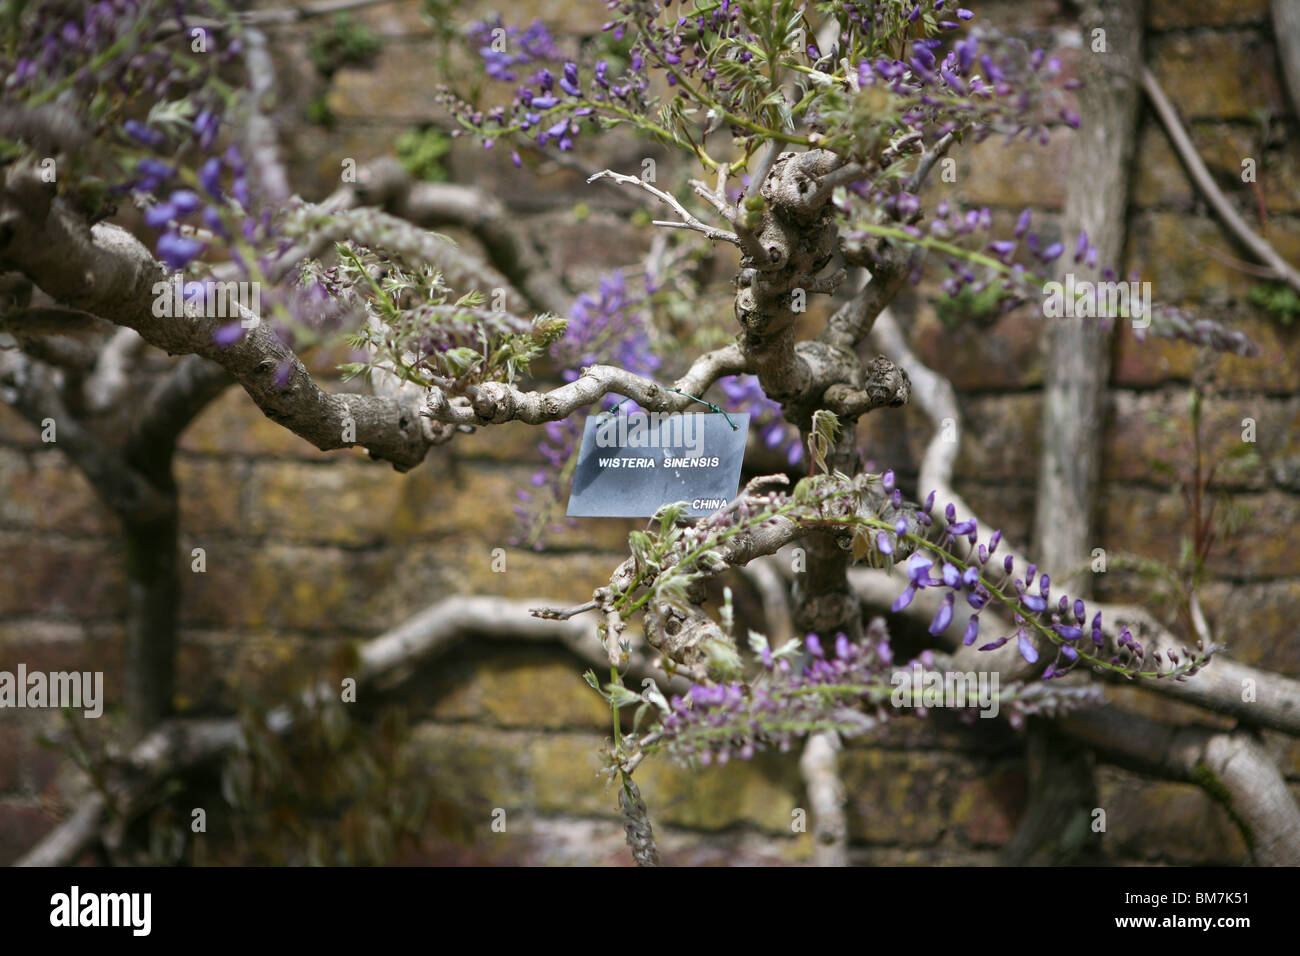 Etiqueta vegetal tradicional para Wisteria sinensis (Wisteria china), floración púrpura, contra una pared de ladrillo. Foto de stock